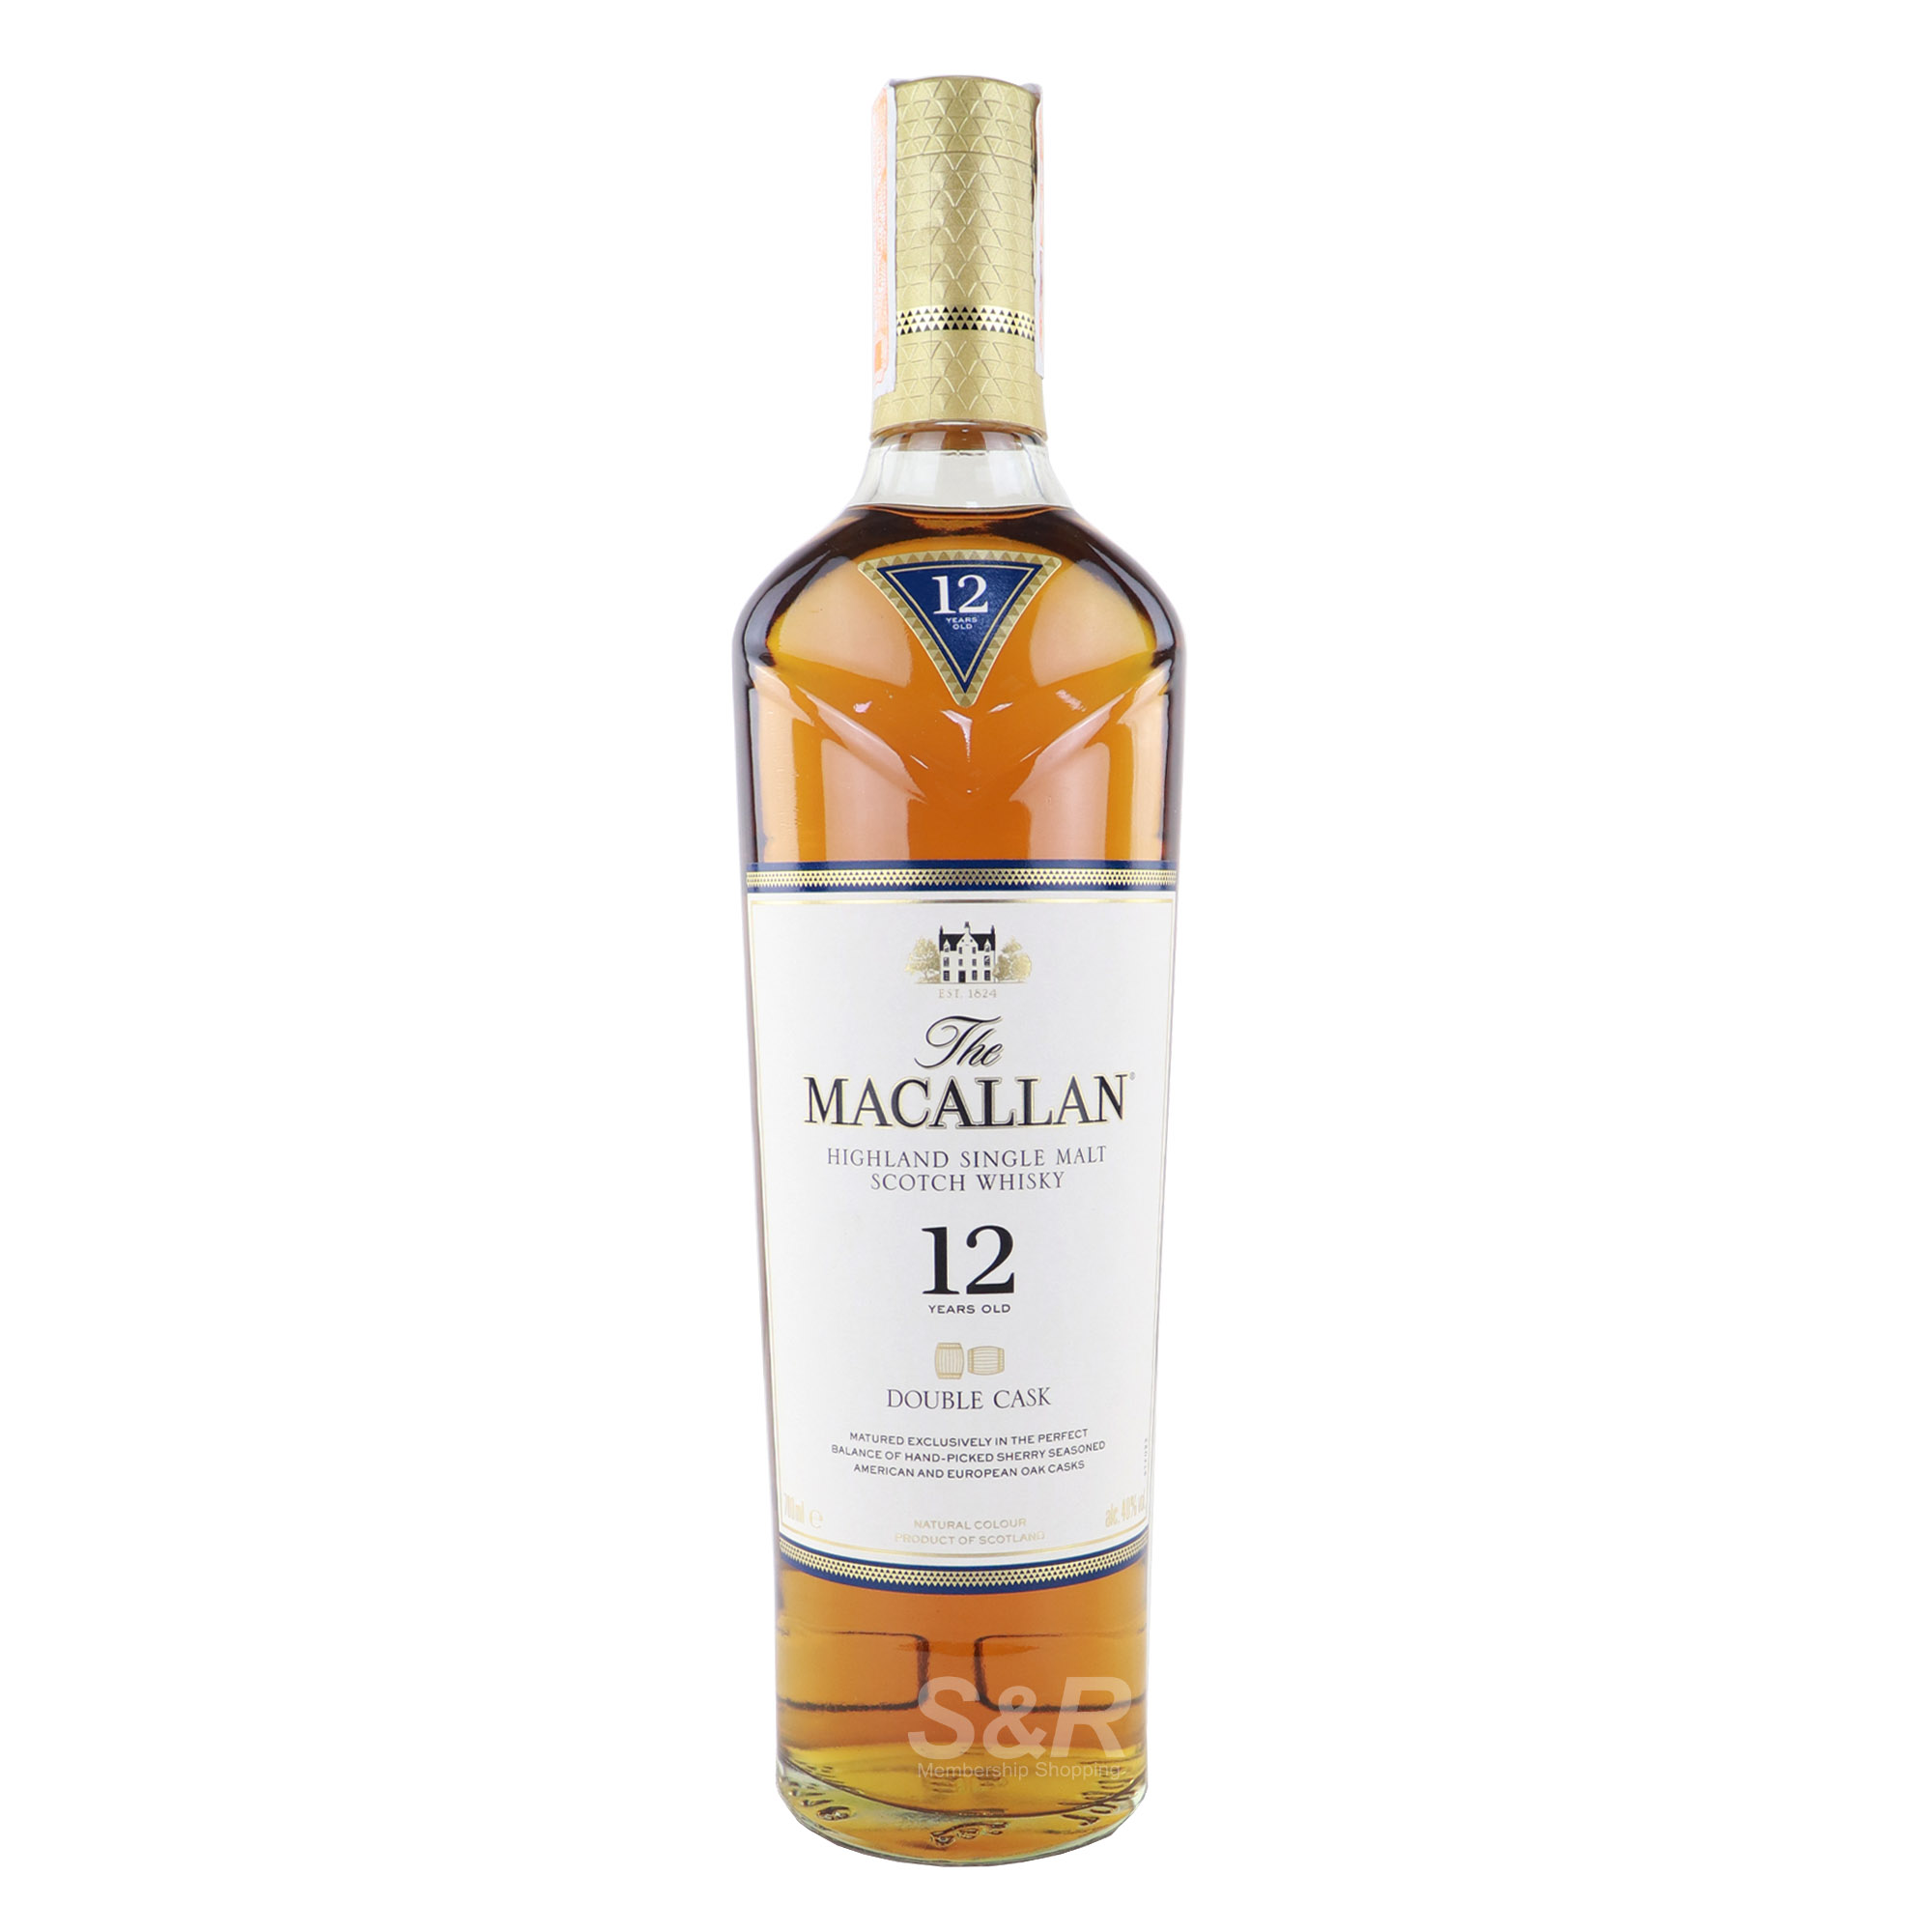 The Macallan Highland Single Malt Scotch Whisky Double Cask 700mL